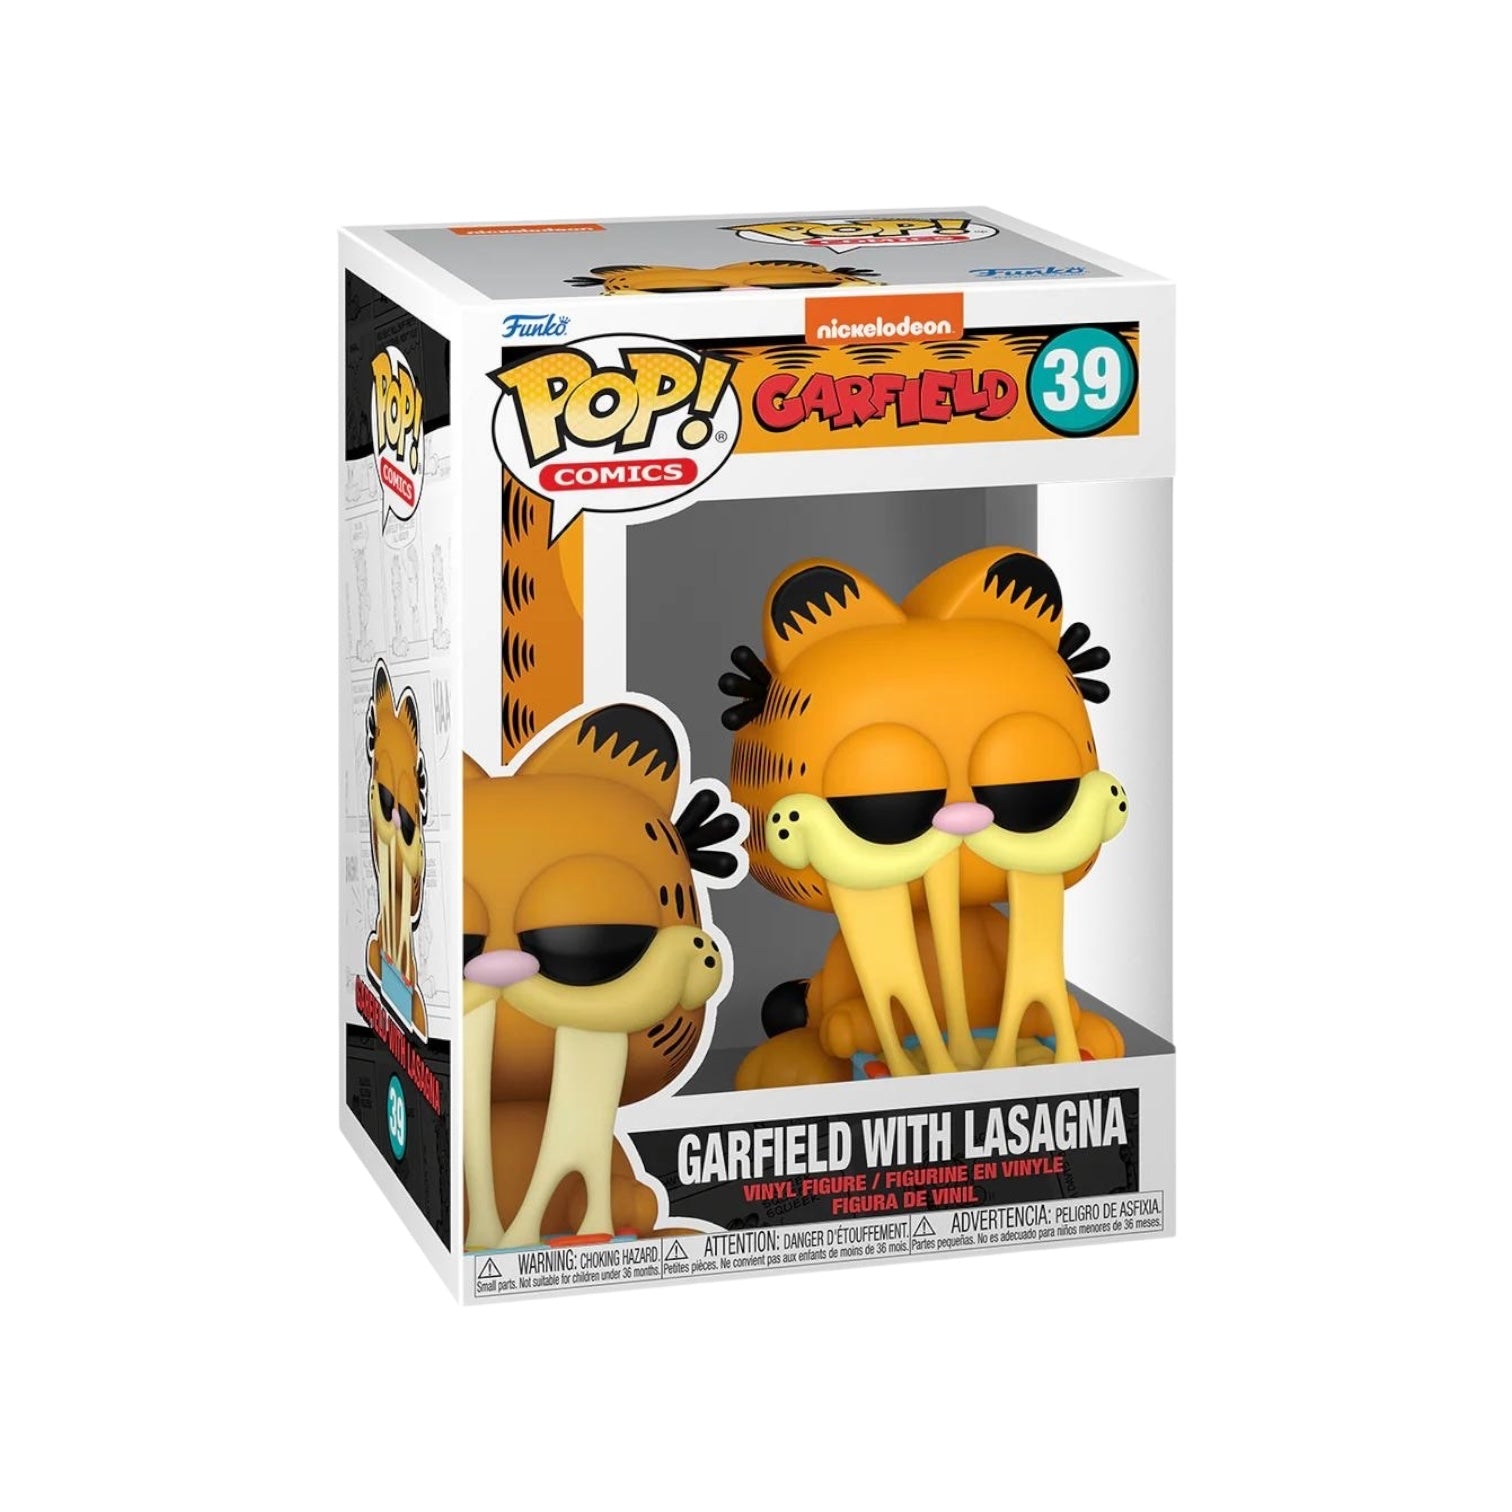 Garfield with Lasagna #39 Funko Pop! - Garfield - PREORDER